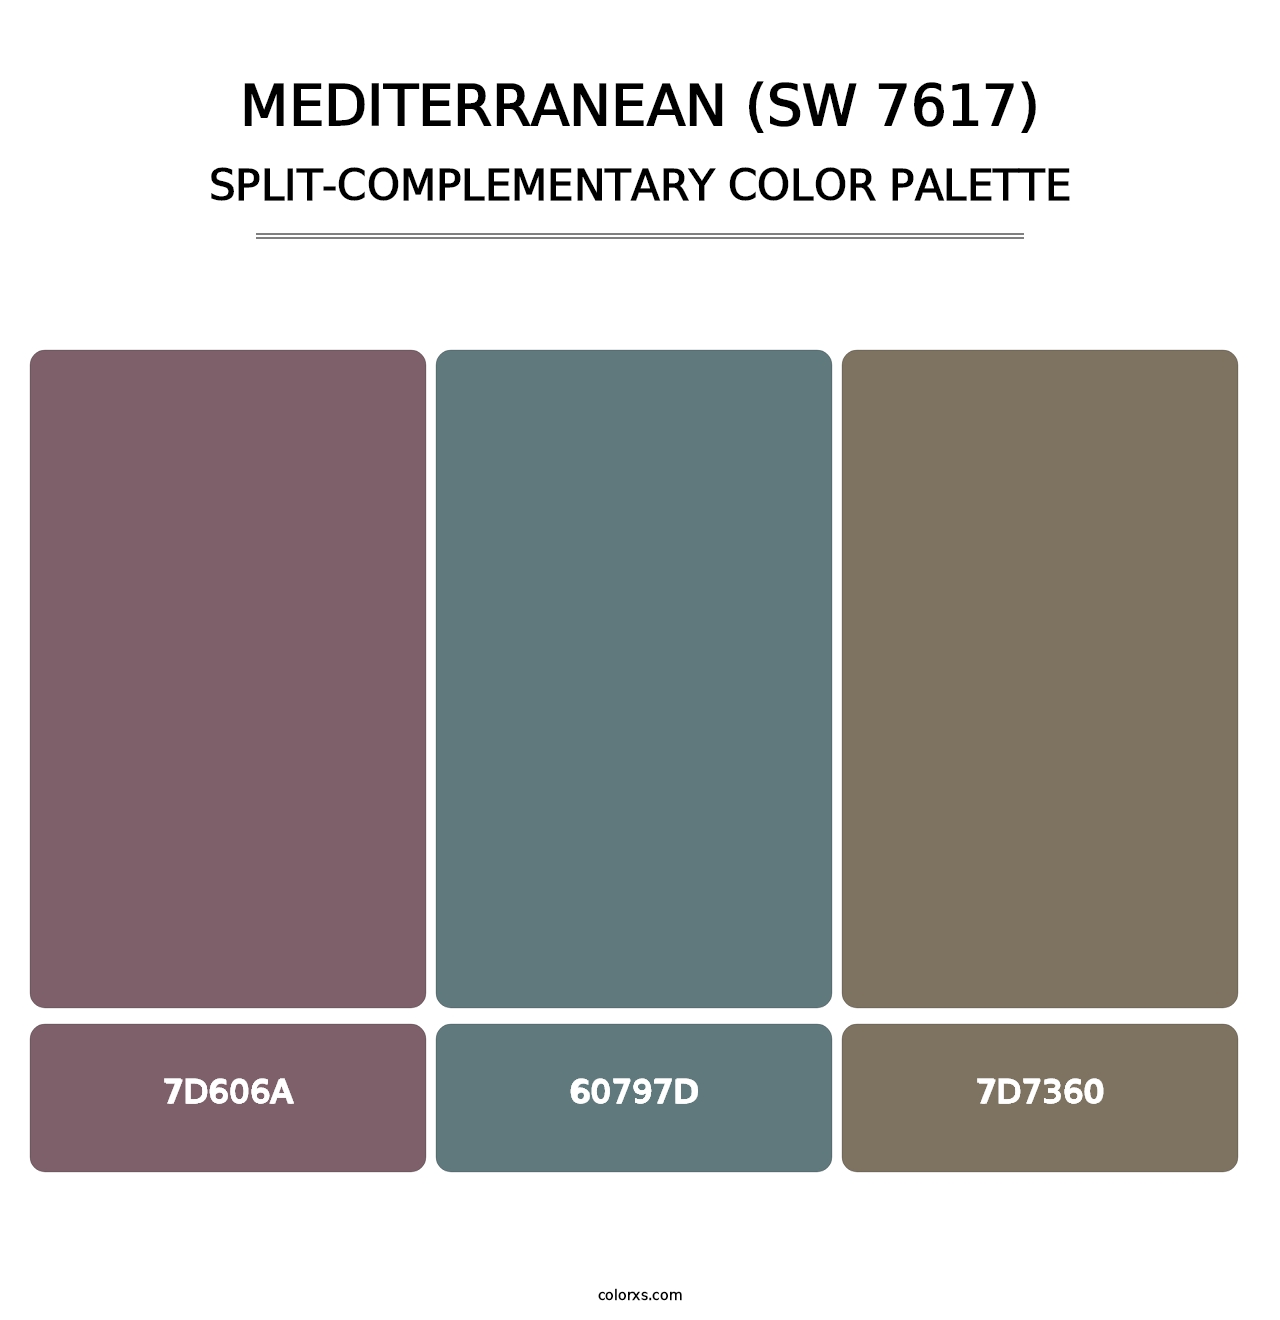 Mediterranean (SW 7617) - Split-Complementary Color Palette